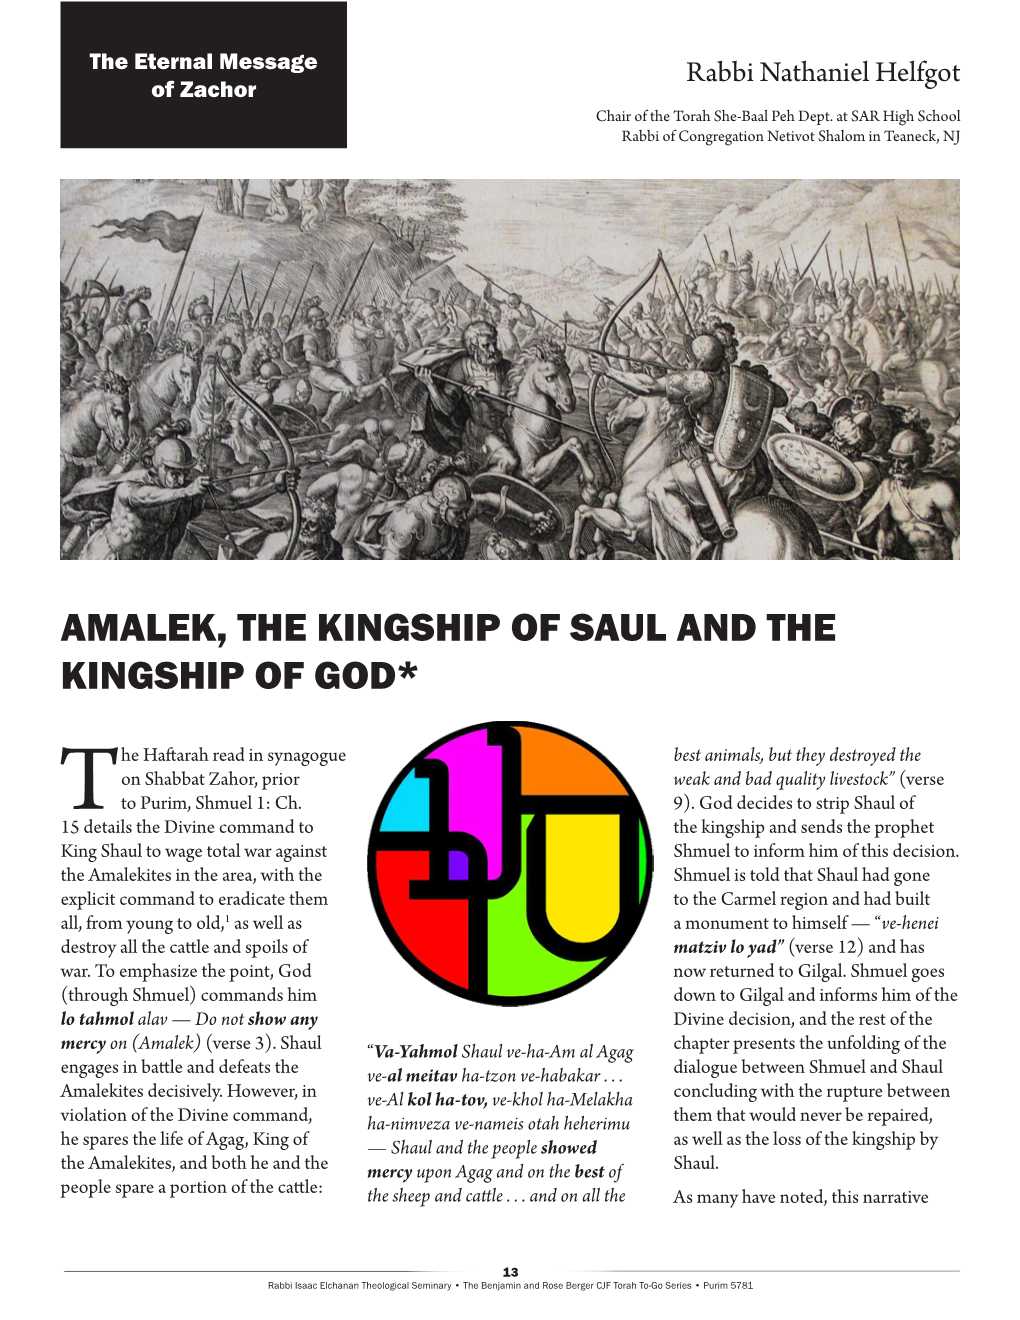 Rabbi Nathaniel Helfgot: "Amalek, the Kingship of Saul and the Kingship